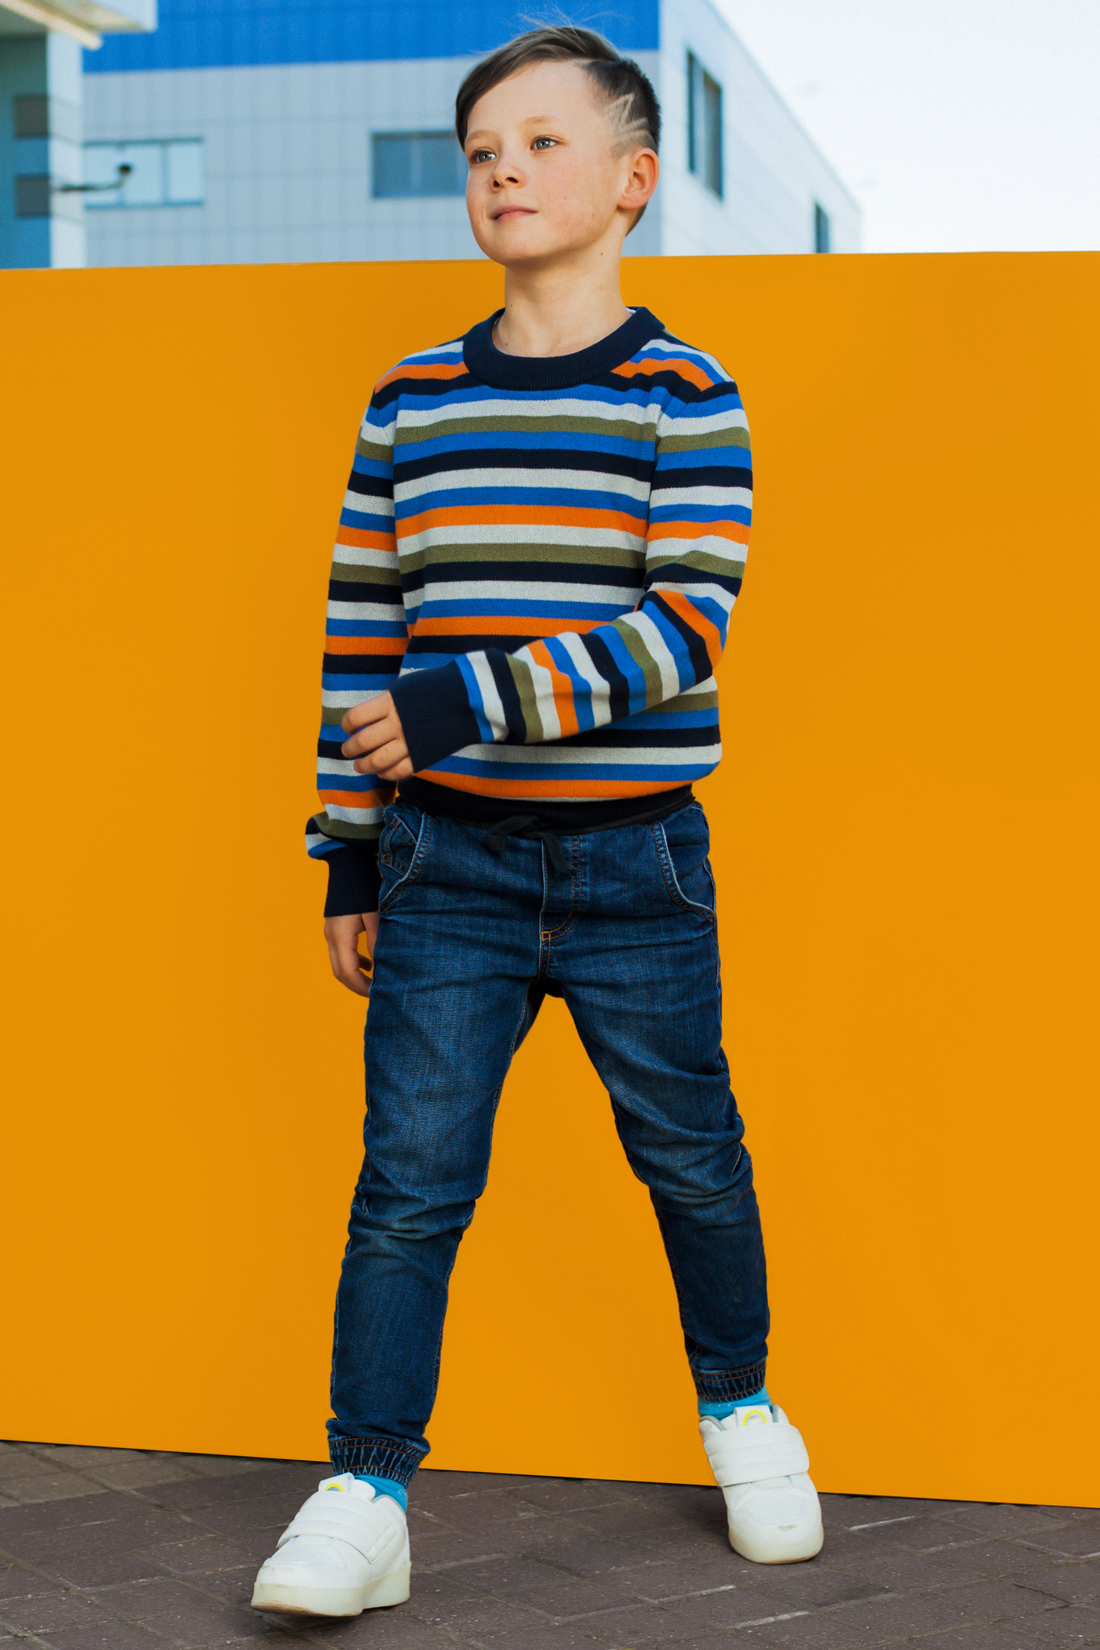 Джемпер для мальчика (арт. baon BJ638501), размер 146-152, цвет multicolor striped#многоцветный